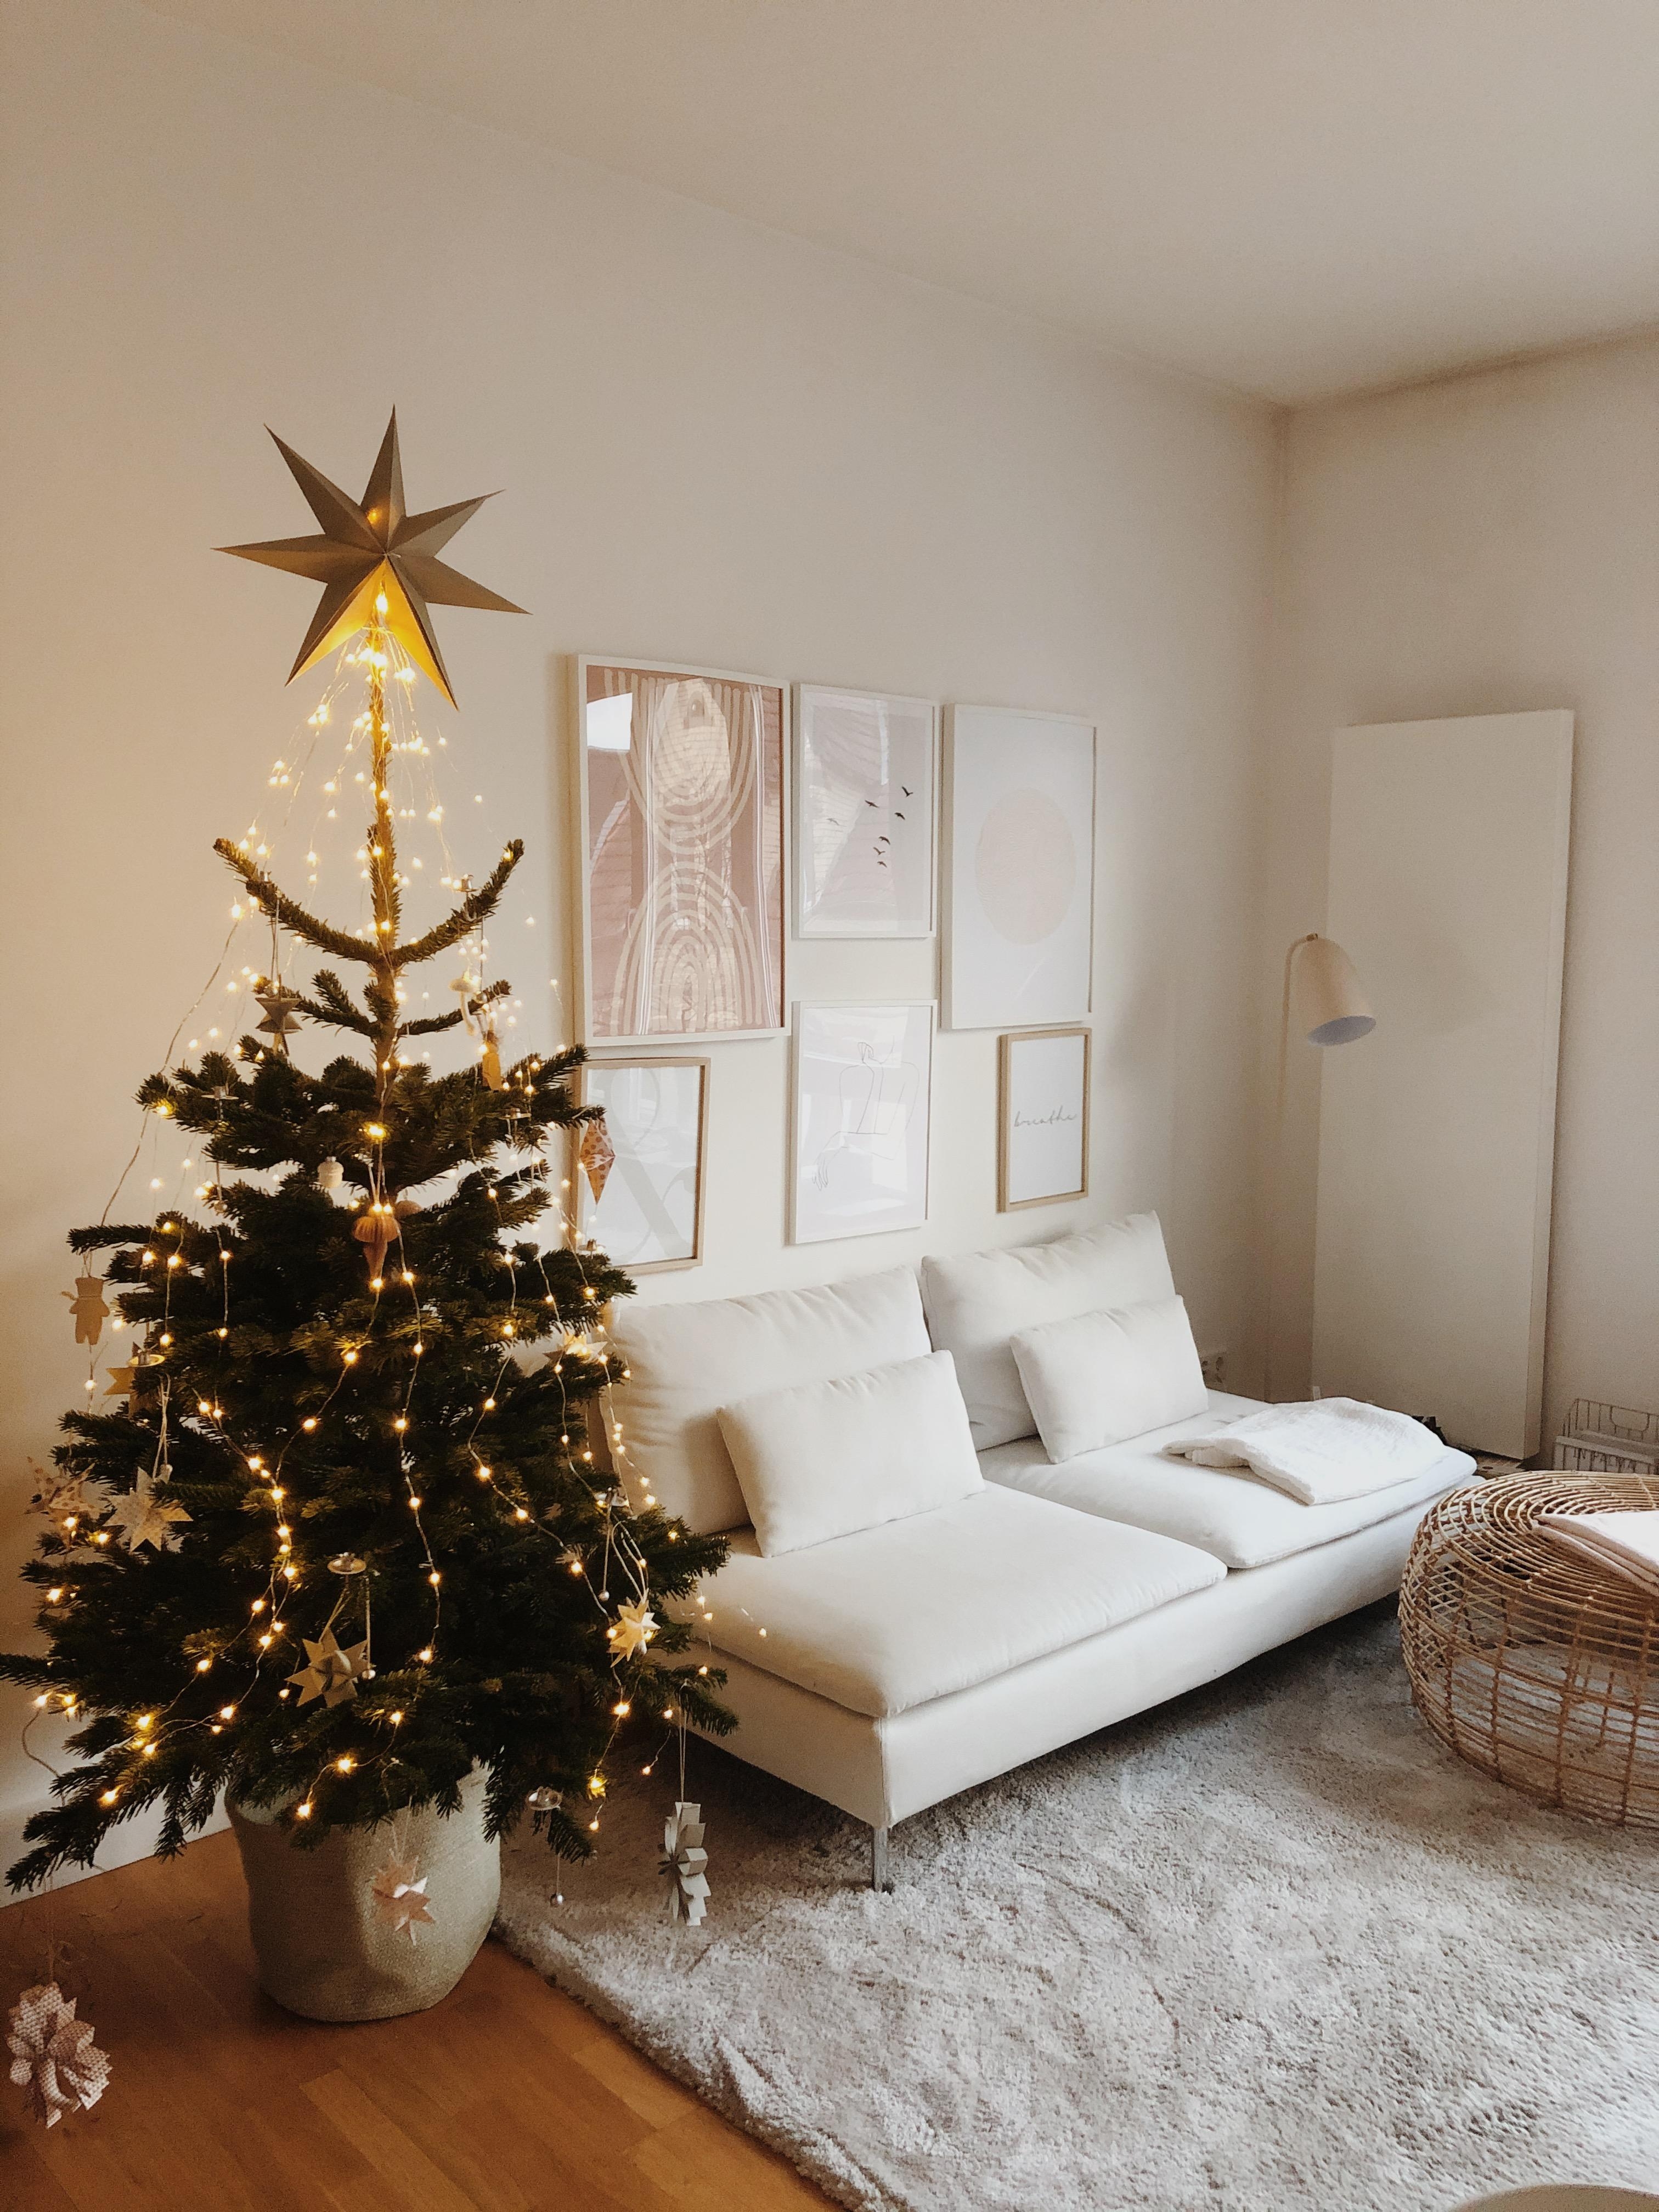 It‘s beginning to look a lot like Christmas... #weihnachten #tannenbaum #homesweethome #vorfreude